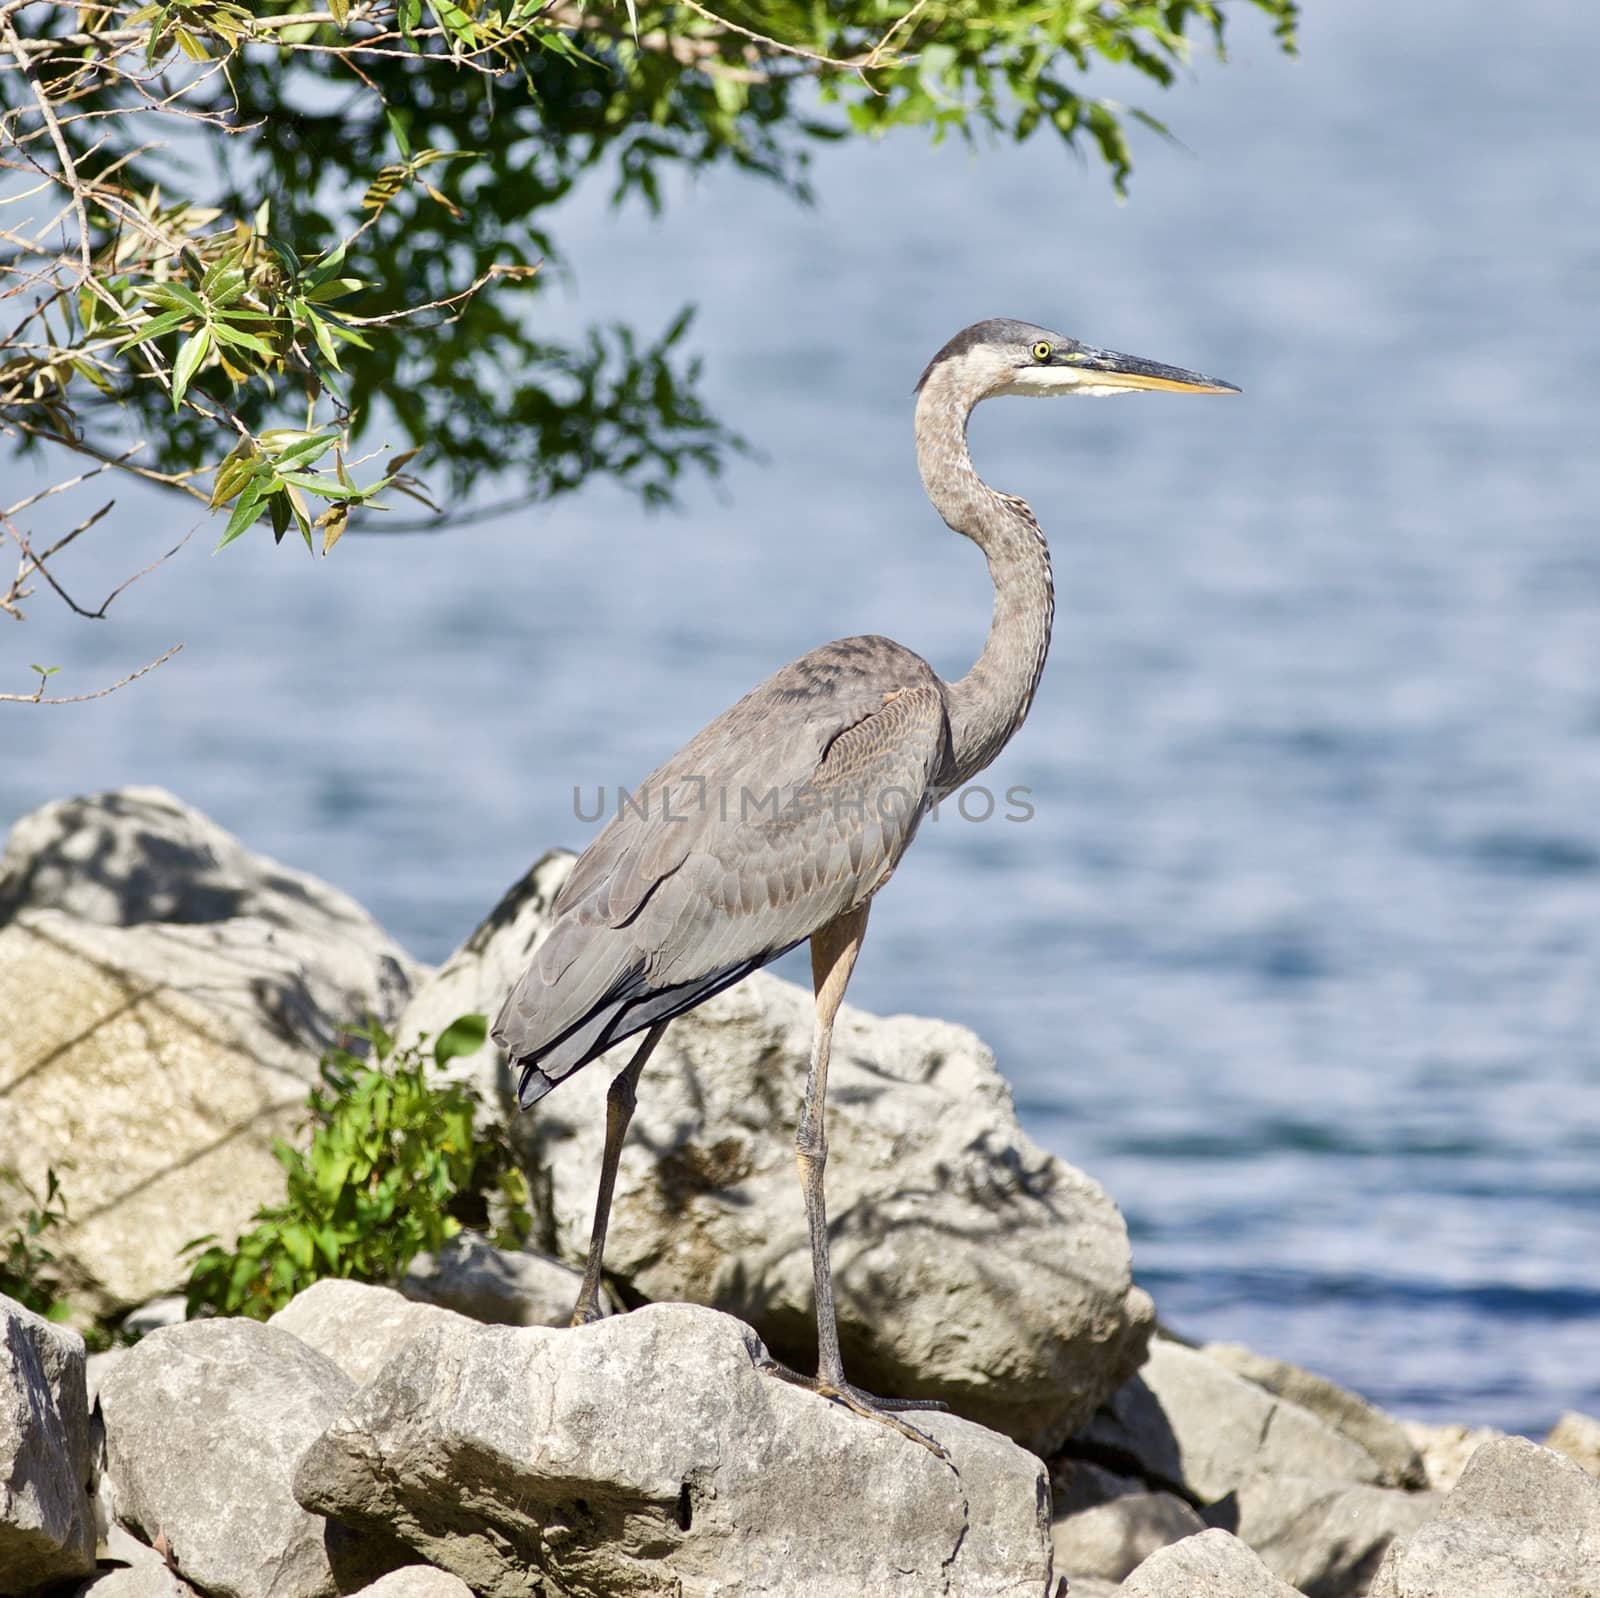 Beautiful photo of a great heron bird on the rock shore